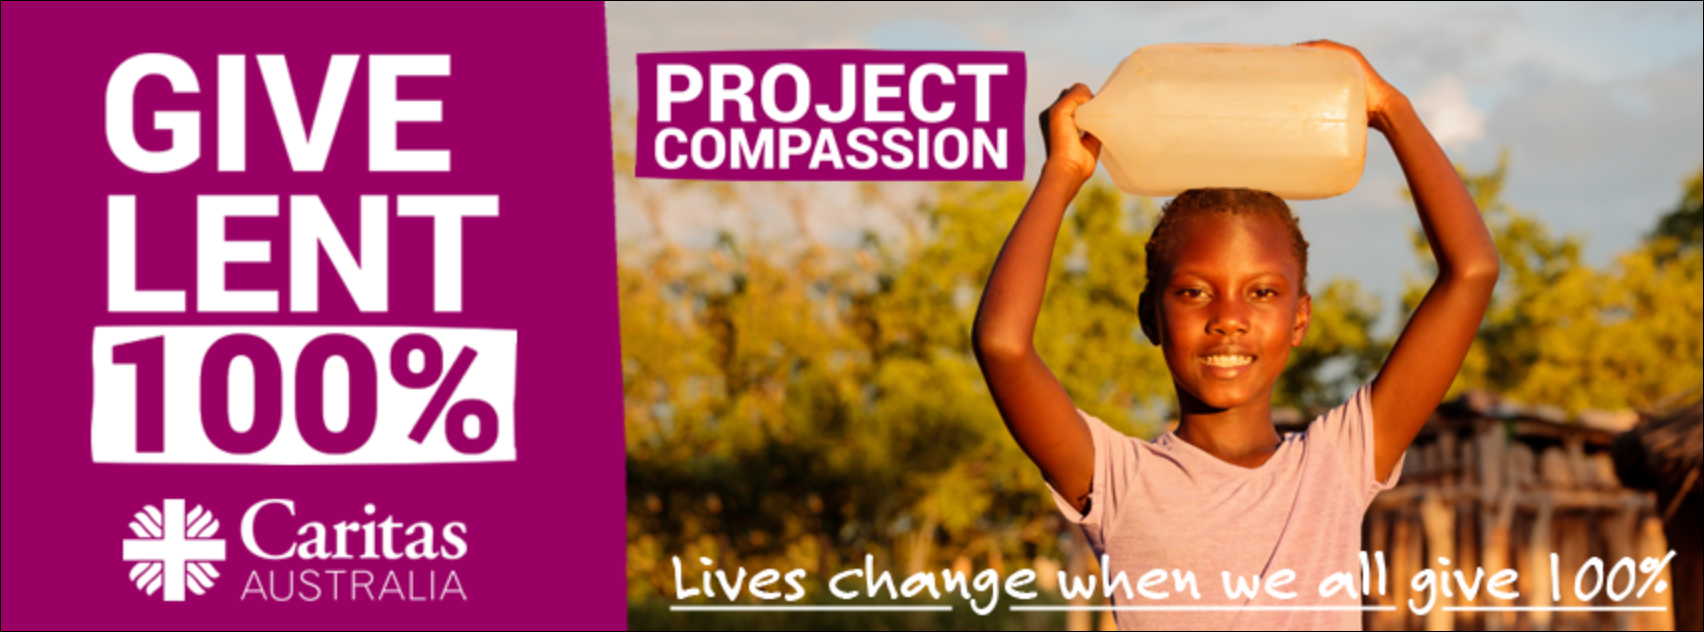 Project Compassion | Edmund Rice College